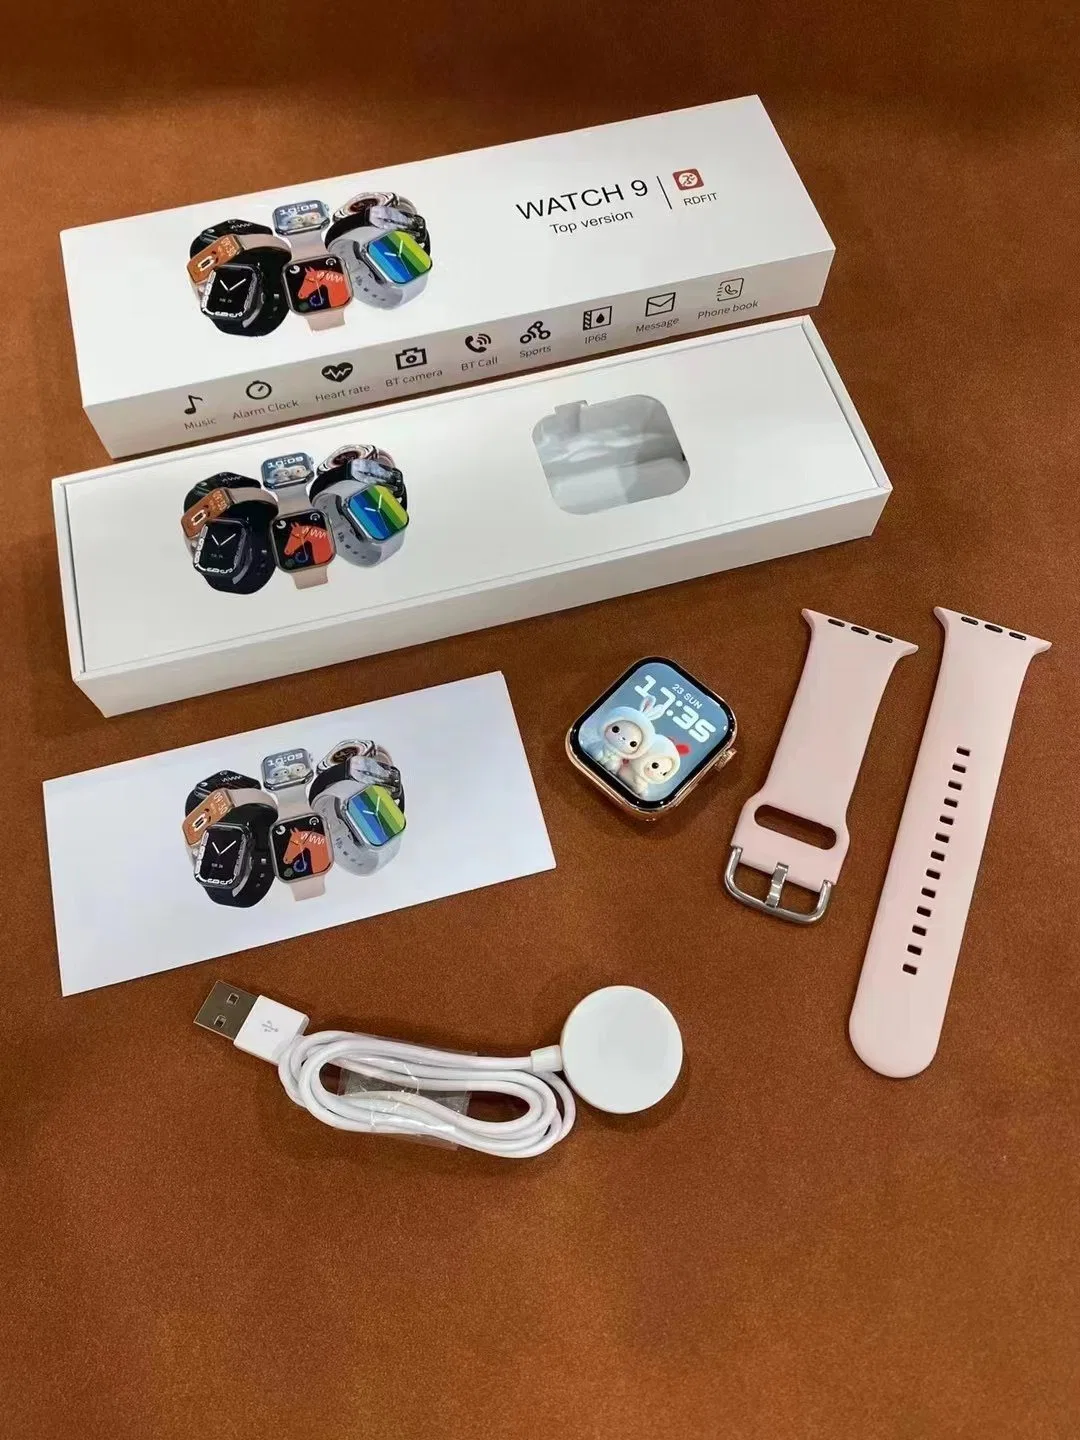 O Smart Electronic Watch pode inserir o Card Watch 9, pode atender e fazer chamadas, o elegante Smart Watch